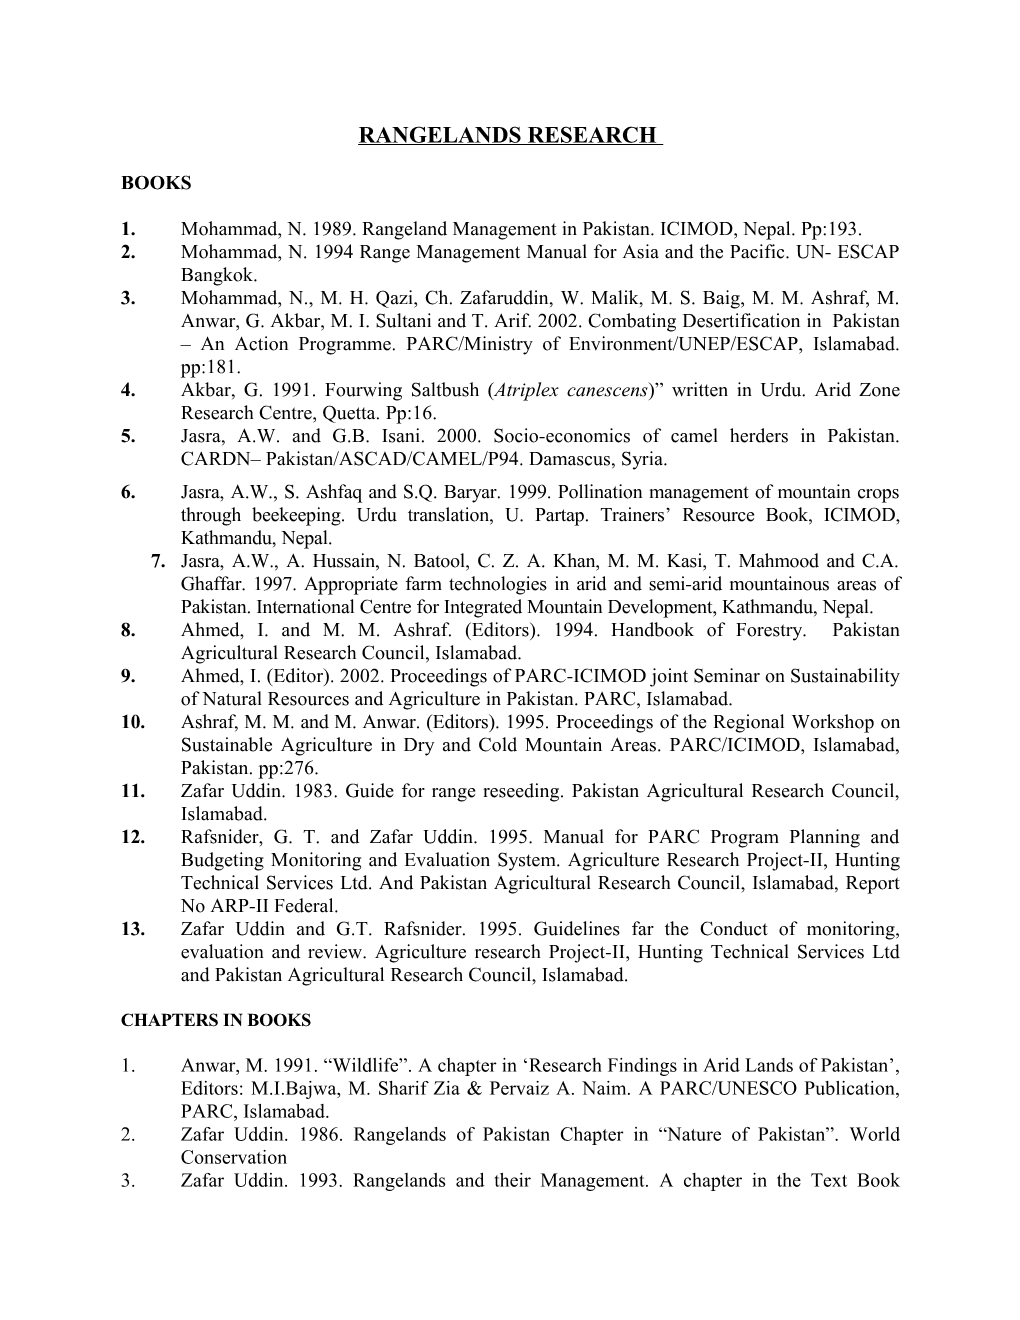 Publications of Rangeland Research Program Scientists